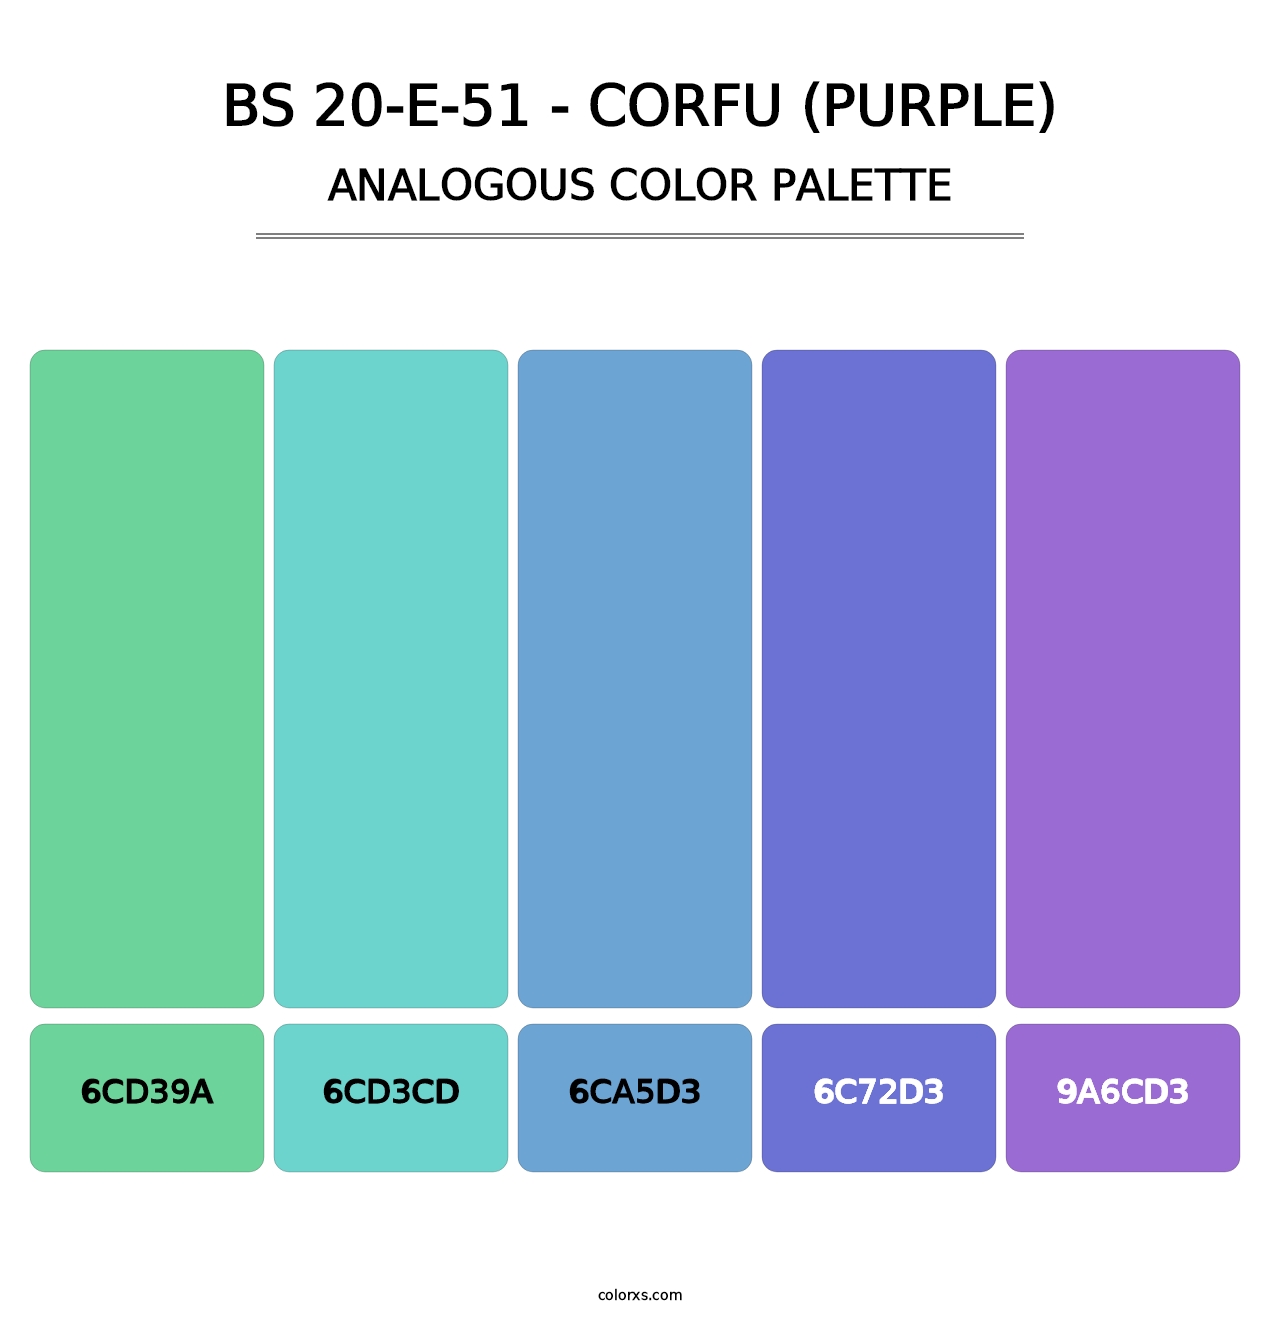 BS 20-E-51 - Corfu (Purple) - Analogous Color Palette